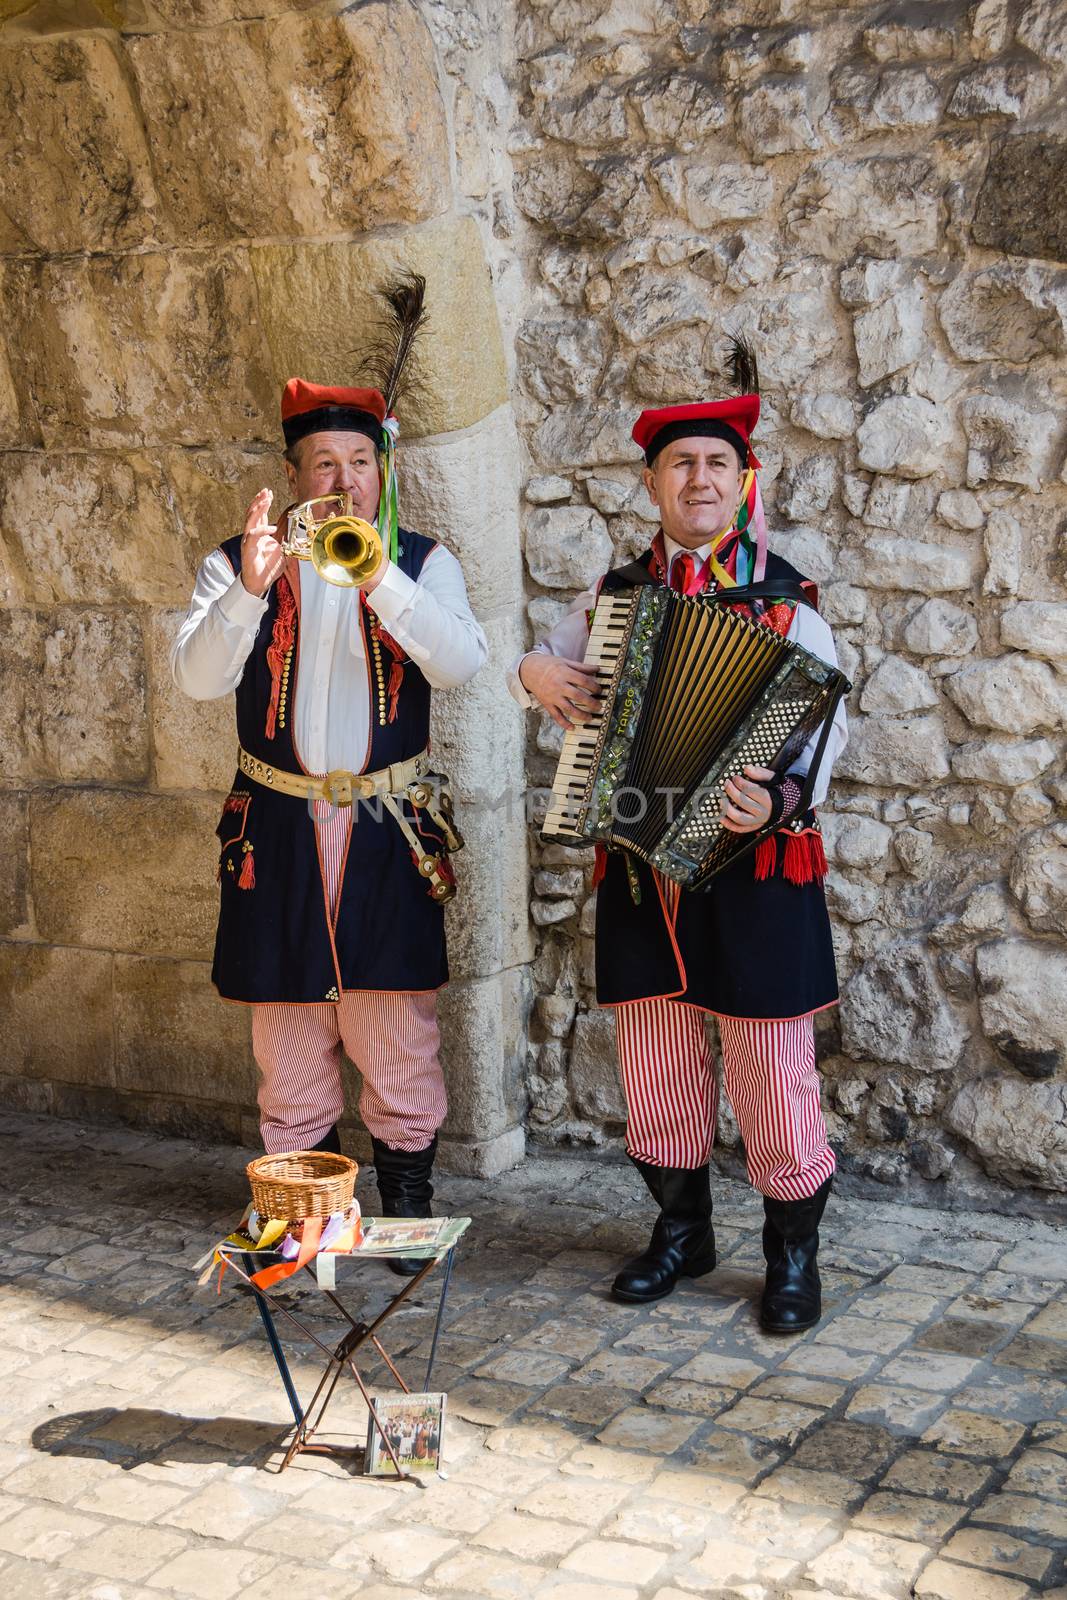 Musicians in traditional folk costumes by pawel_szczepanski